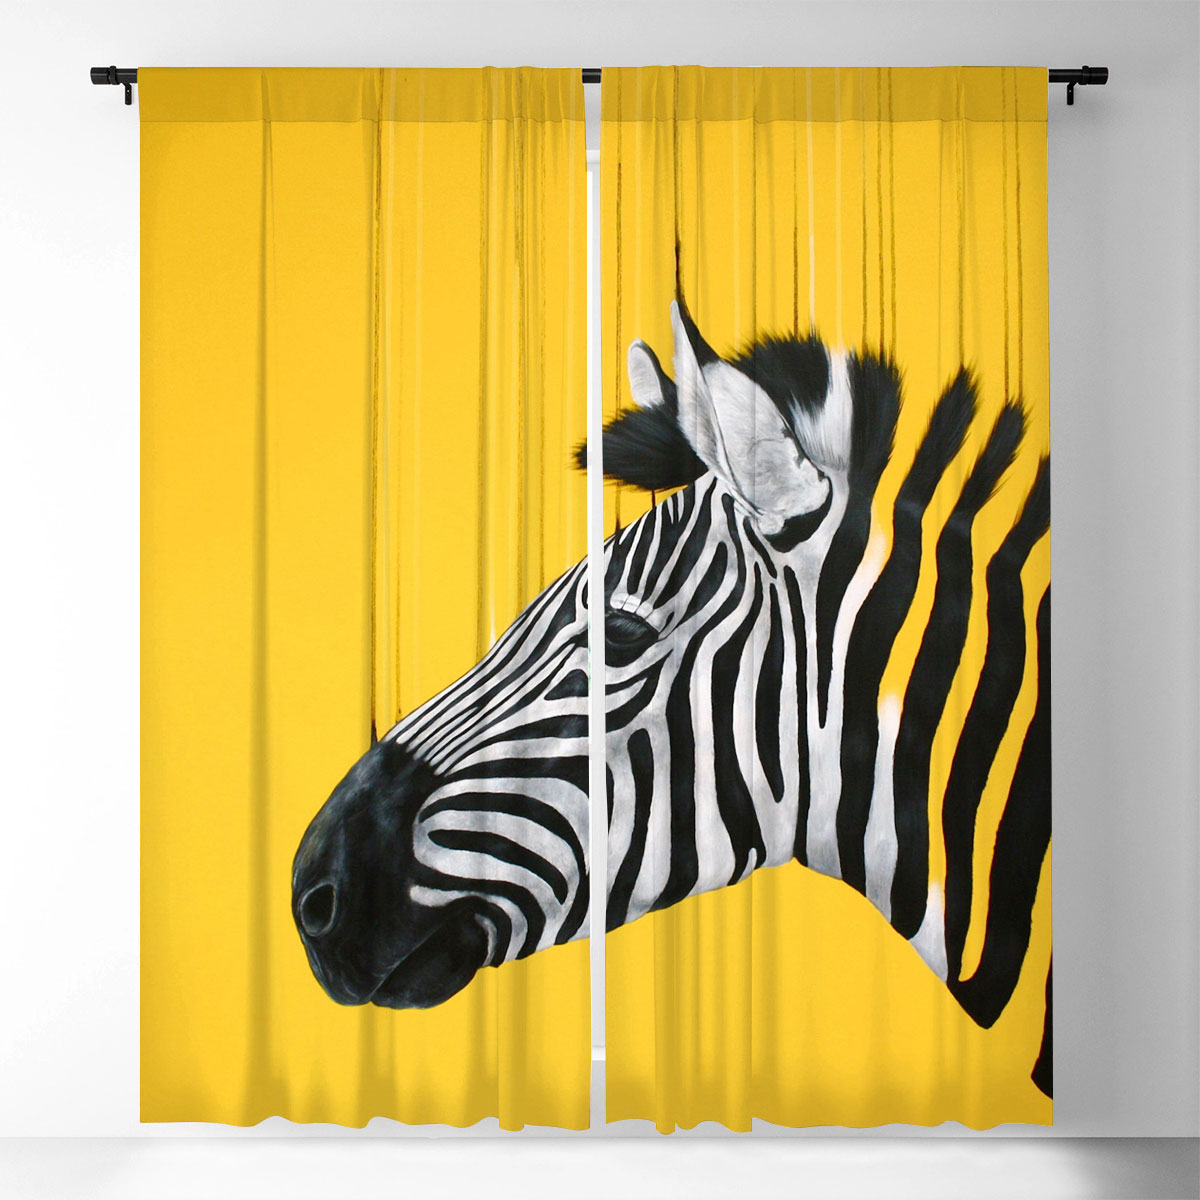 Zebra Abstract Window Curtain_1_2.1